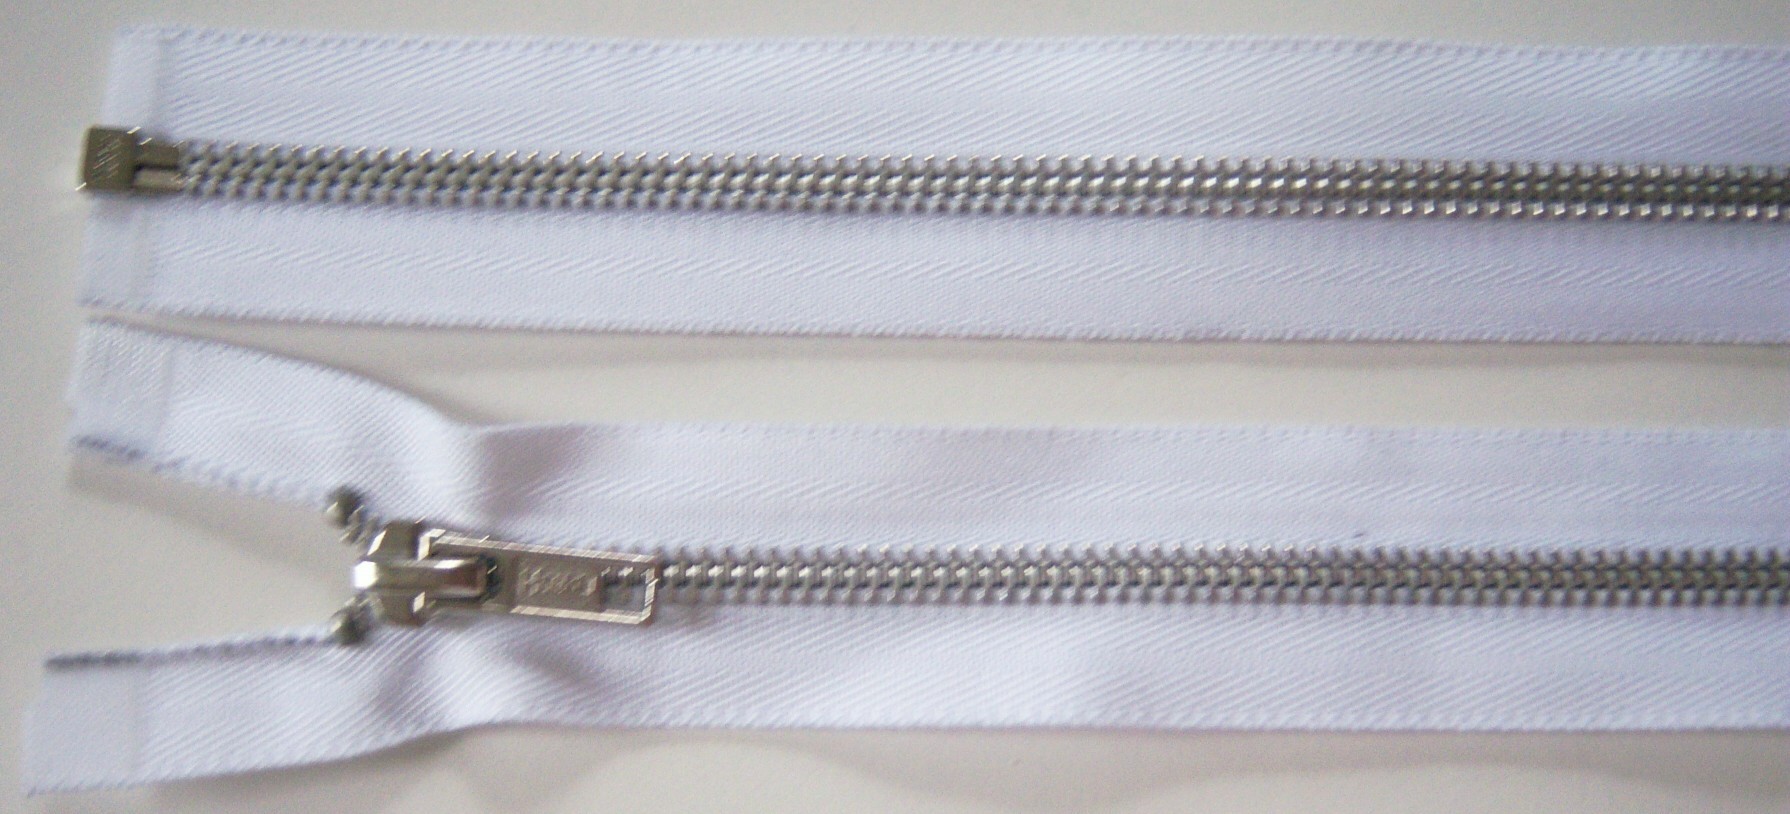 White Ideal 26 1/2" Metal Separating Zipper